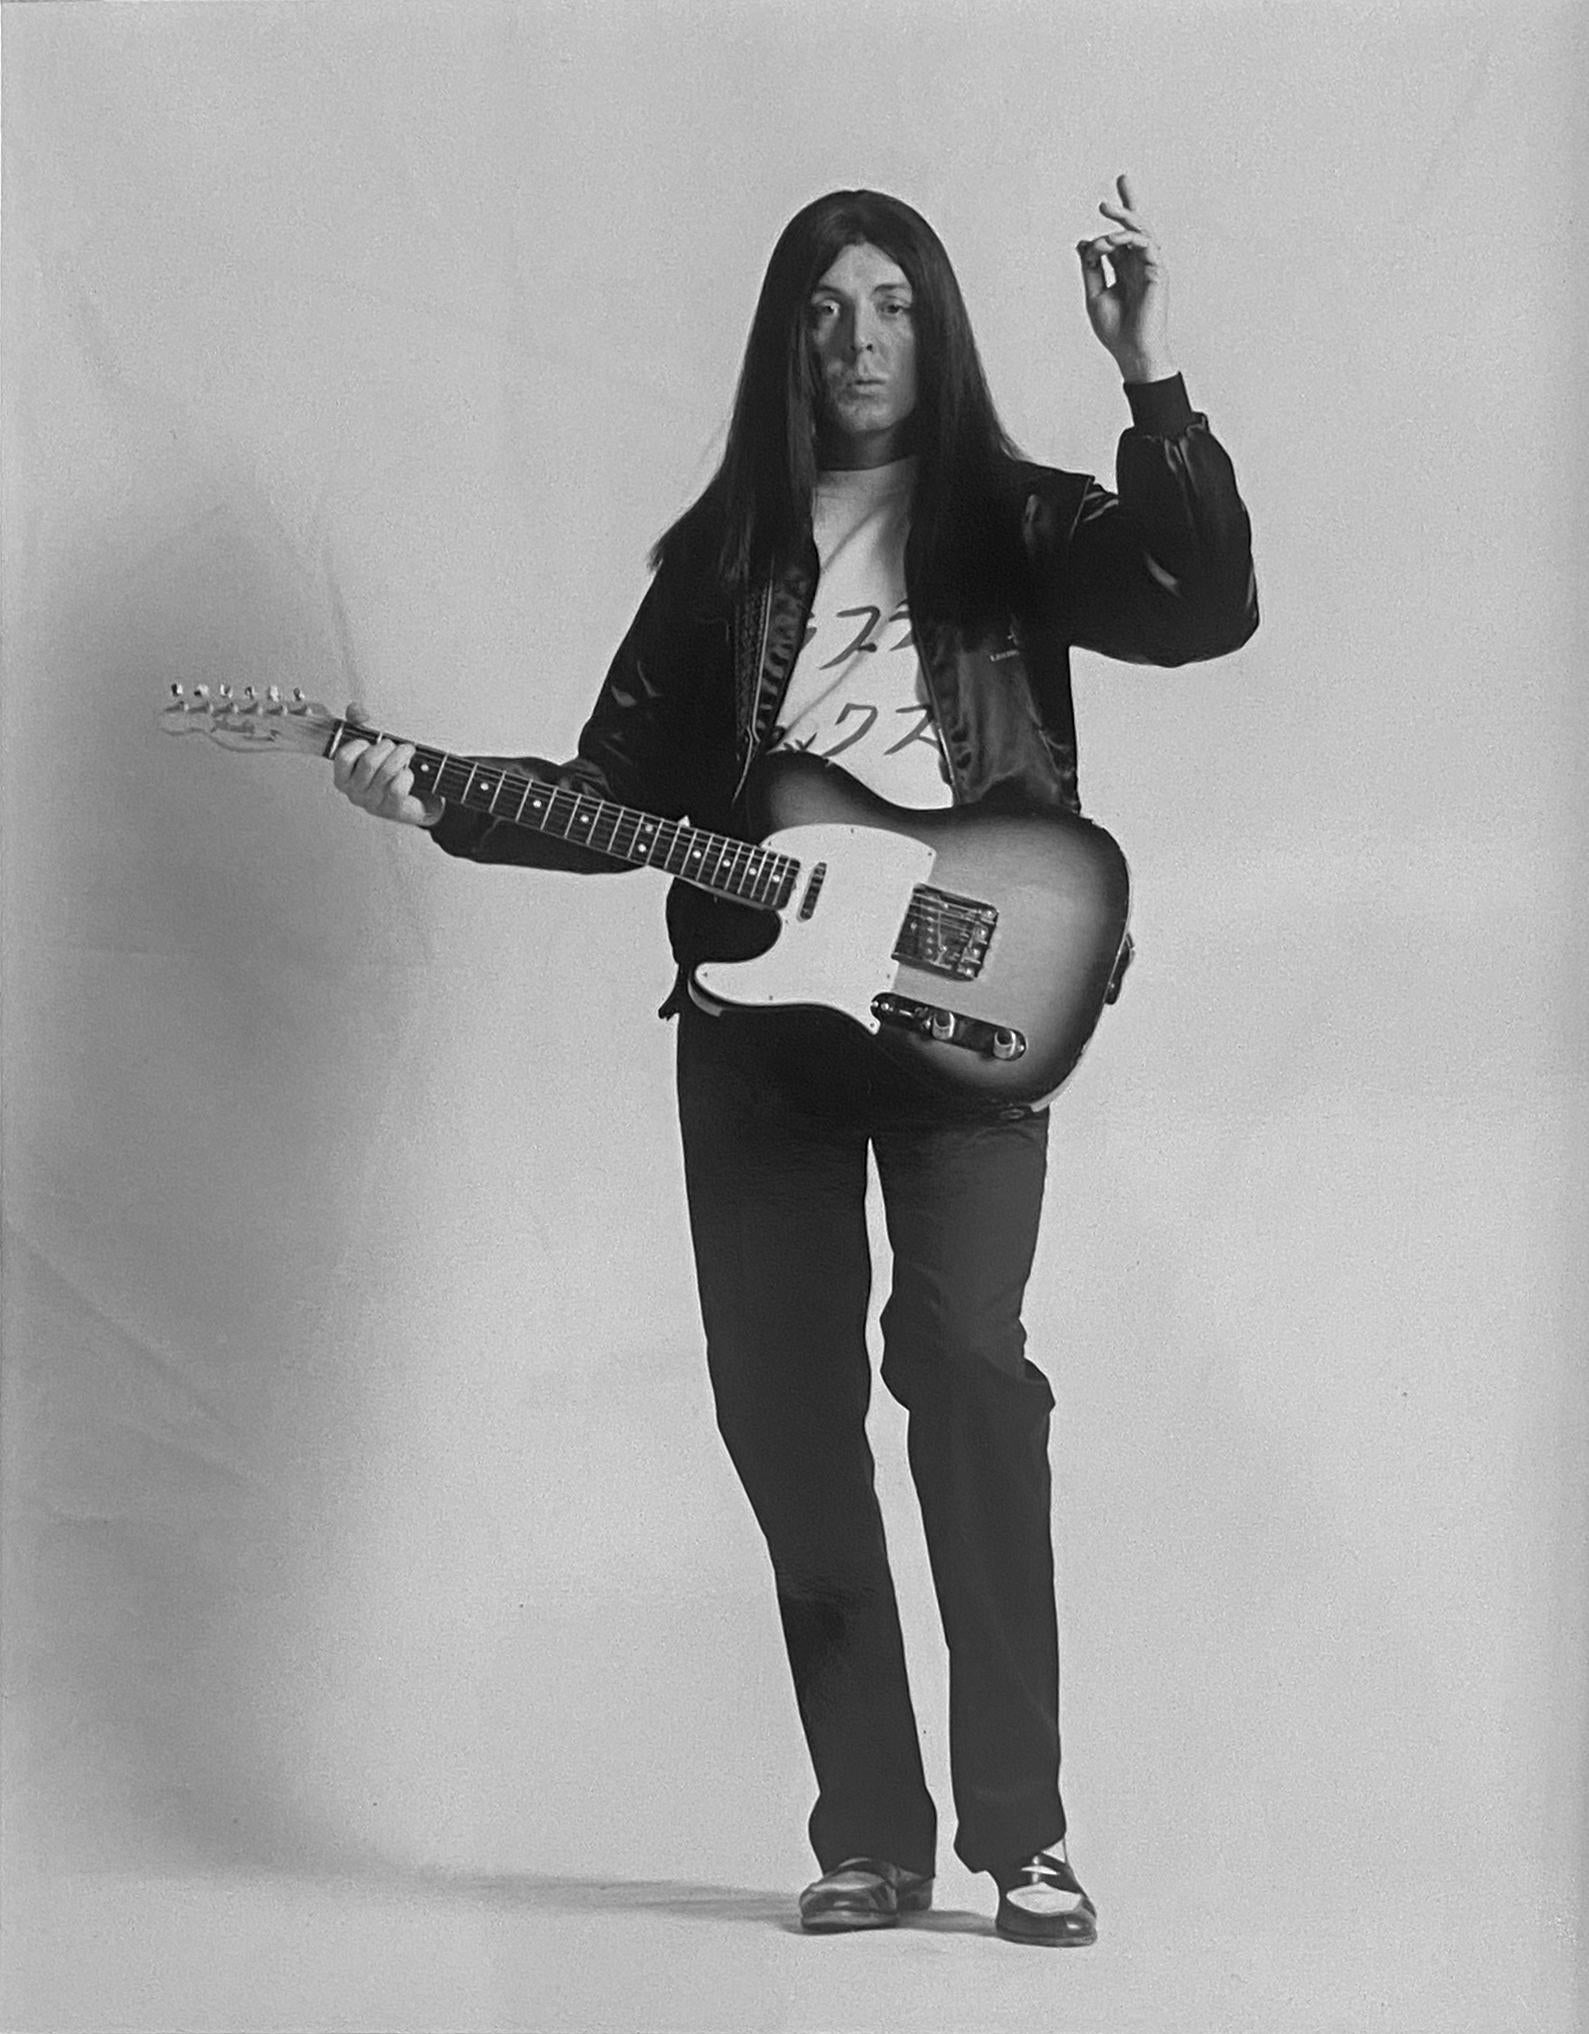 Linda McCartney Portrait Photograph - Paul McCartney Photoshoot - 1